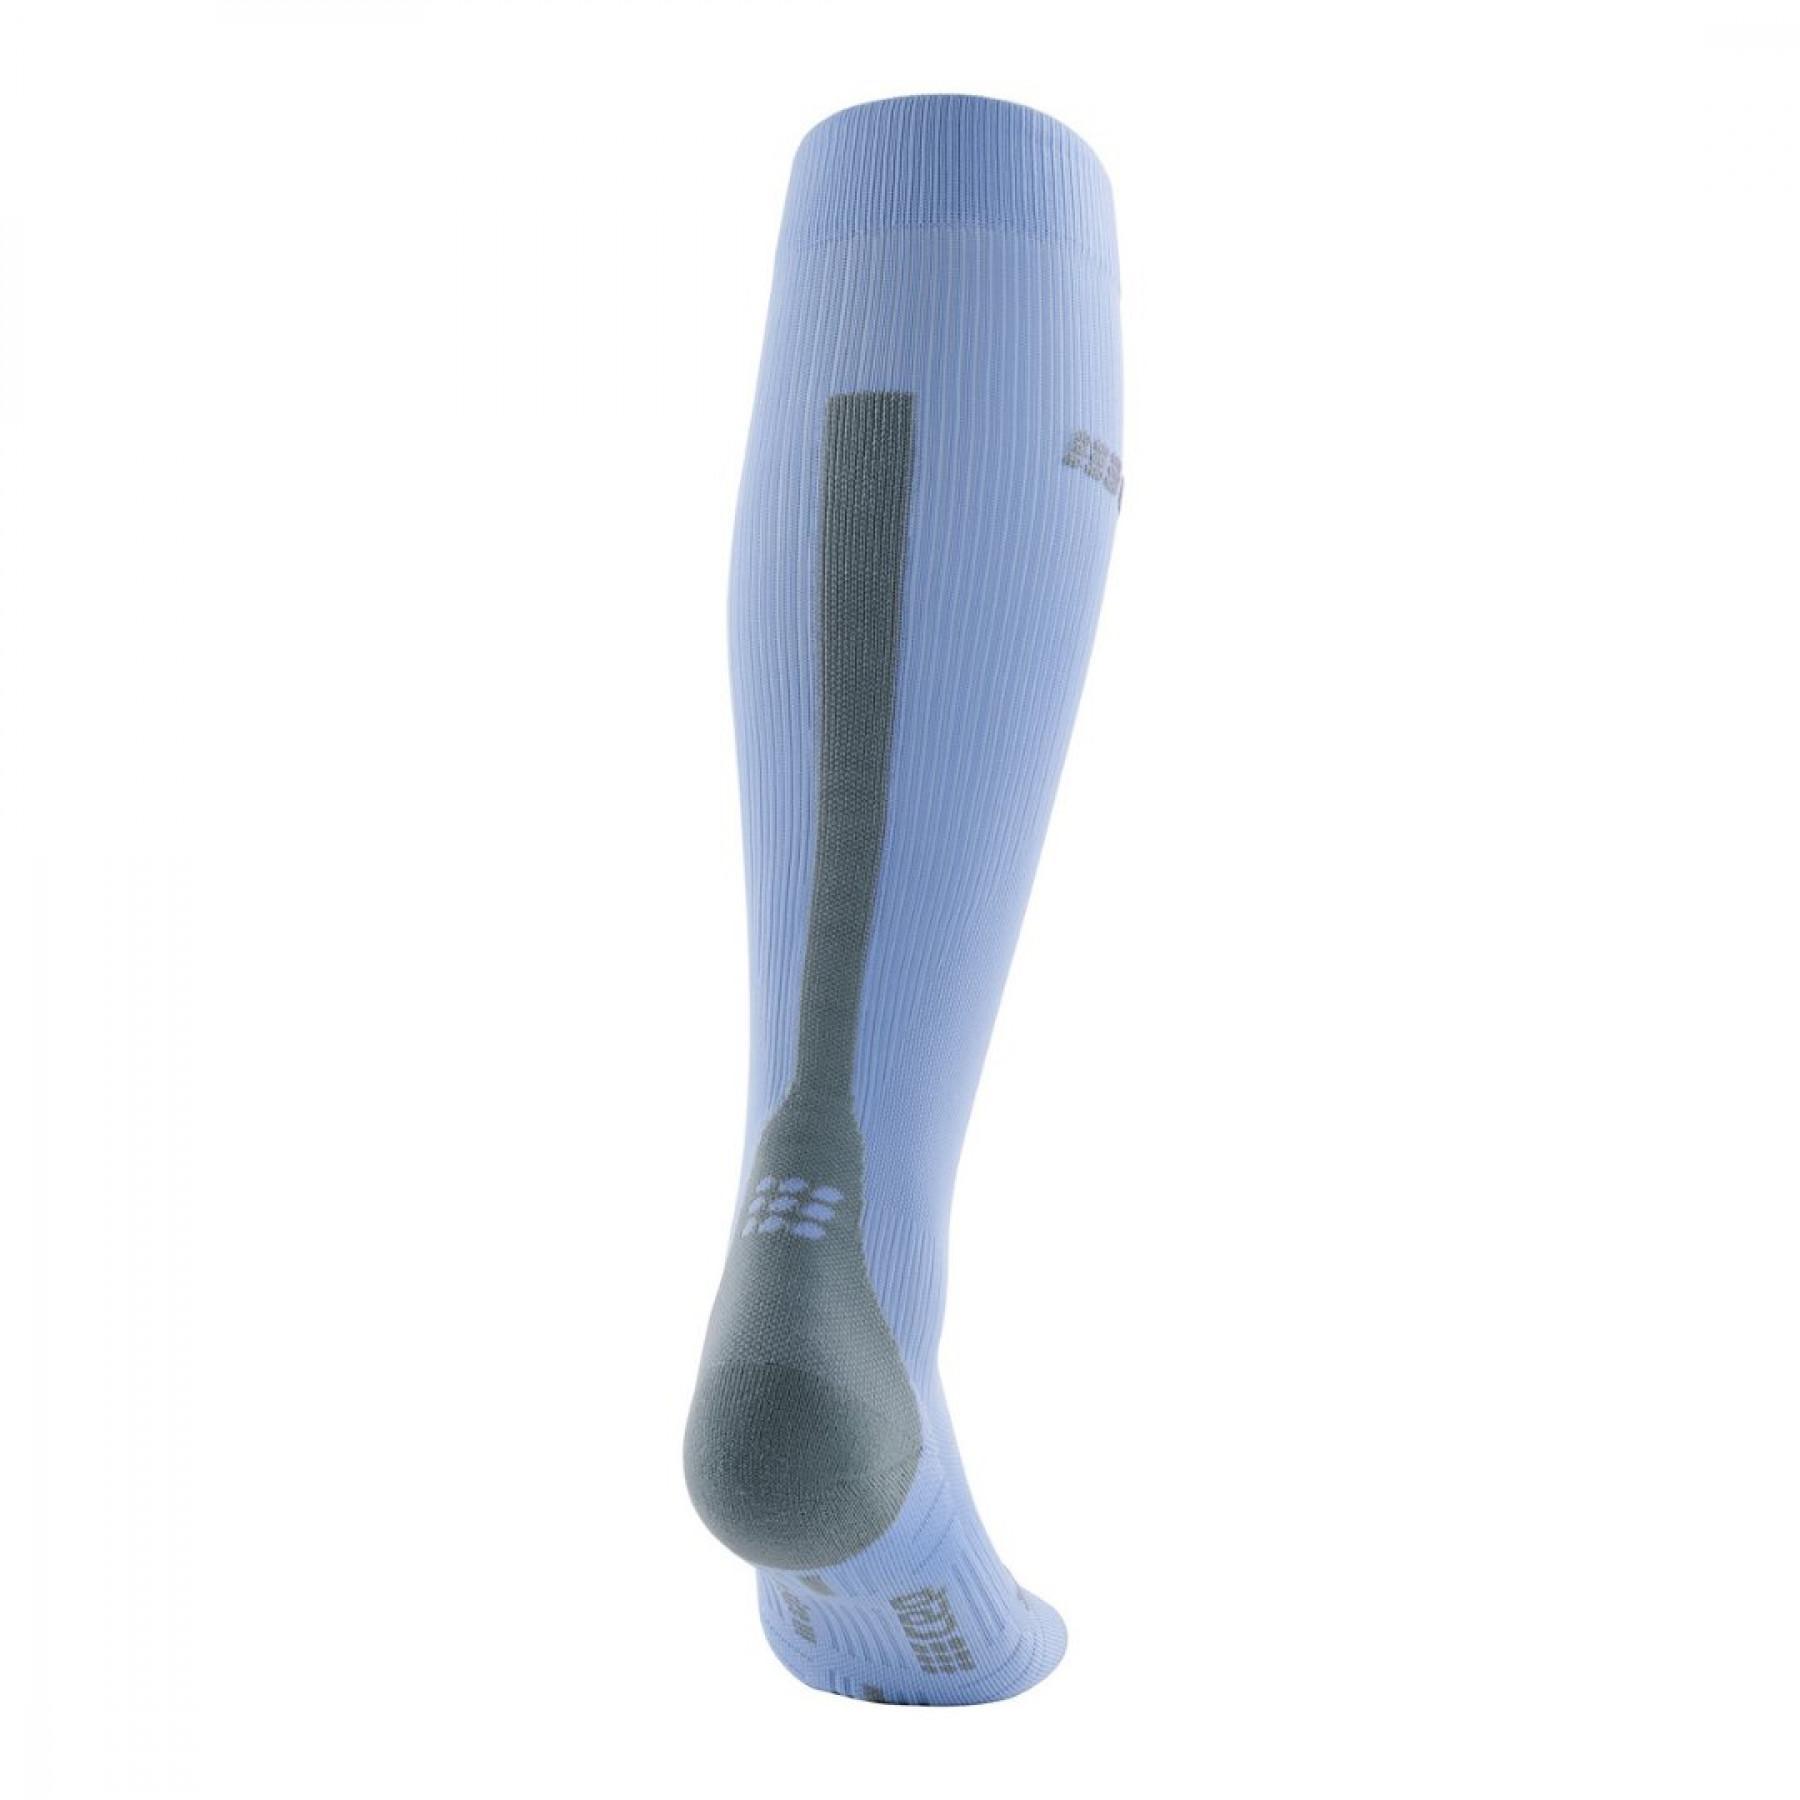 CEP Women's Tall Compression Socks 3.0